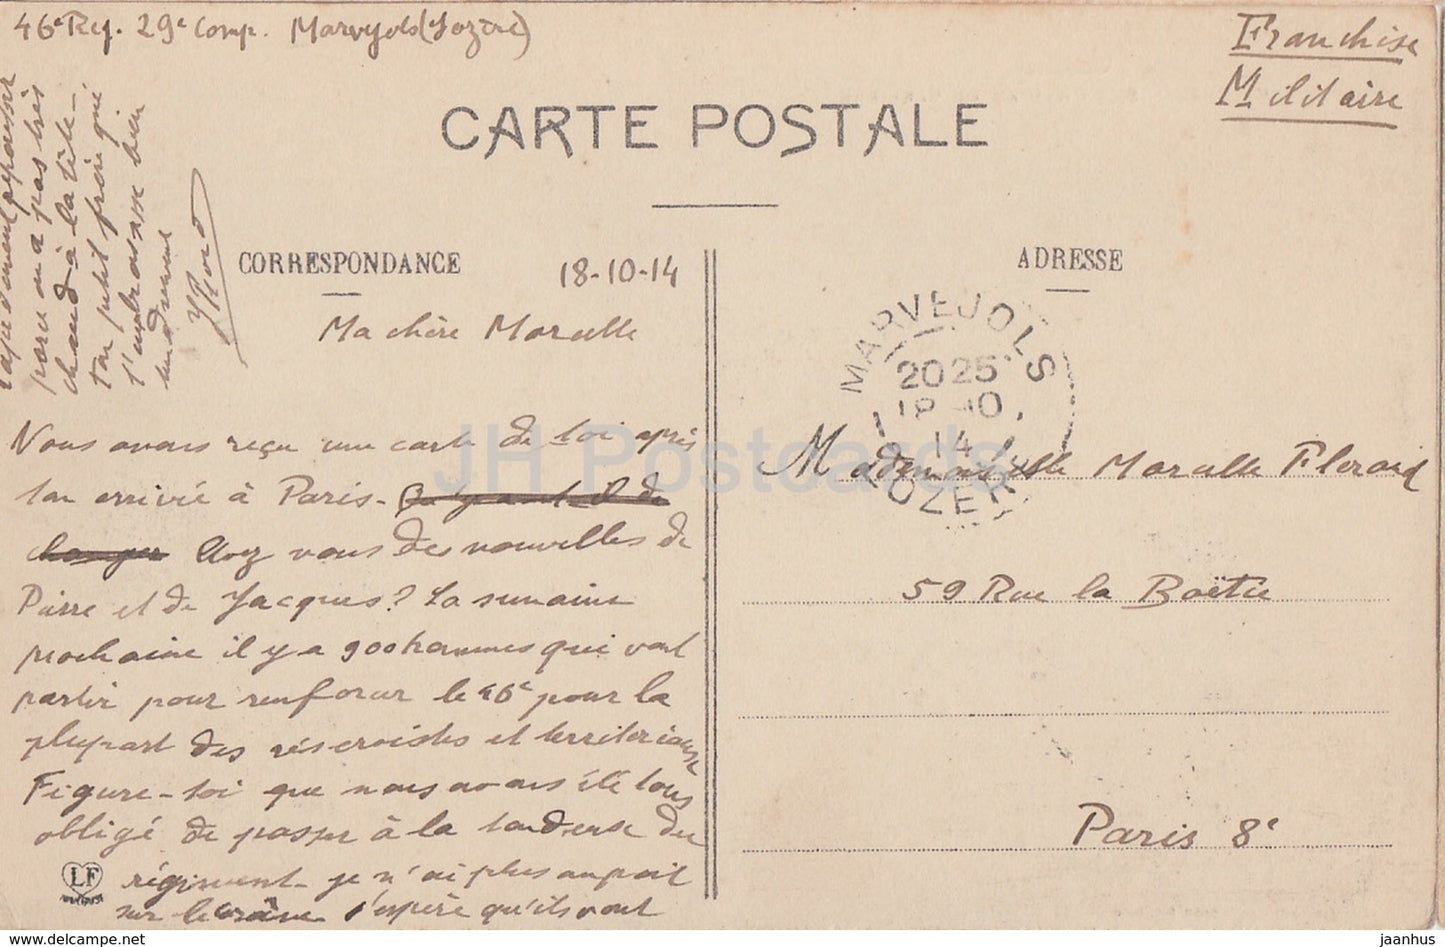 La Lozere - Marvejols - Chateau de Carriere - Schloss - 609 - alte Postkarte - 1914 - Frankreich - gebraucht